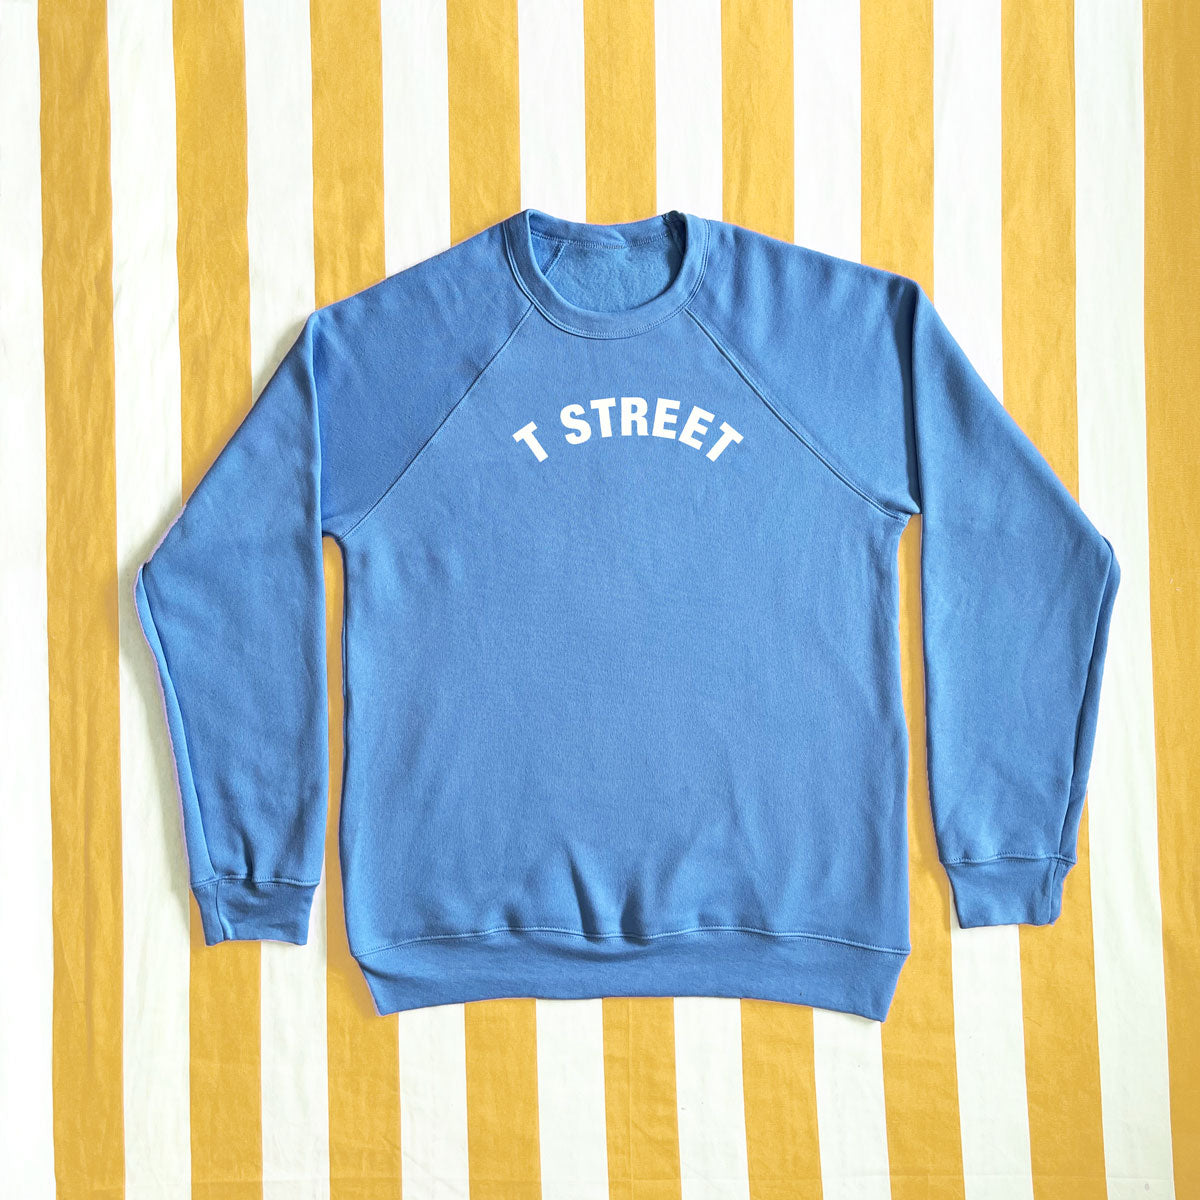 T Street Raglan Sweatshirt